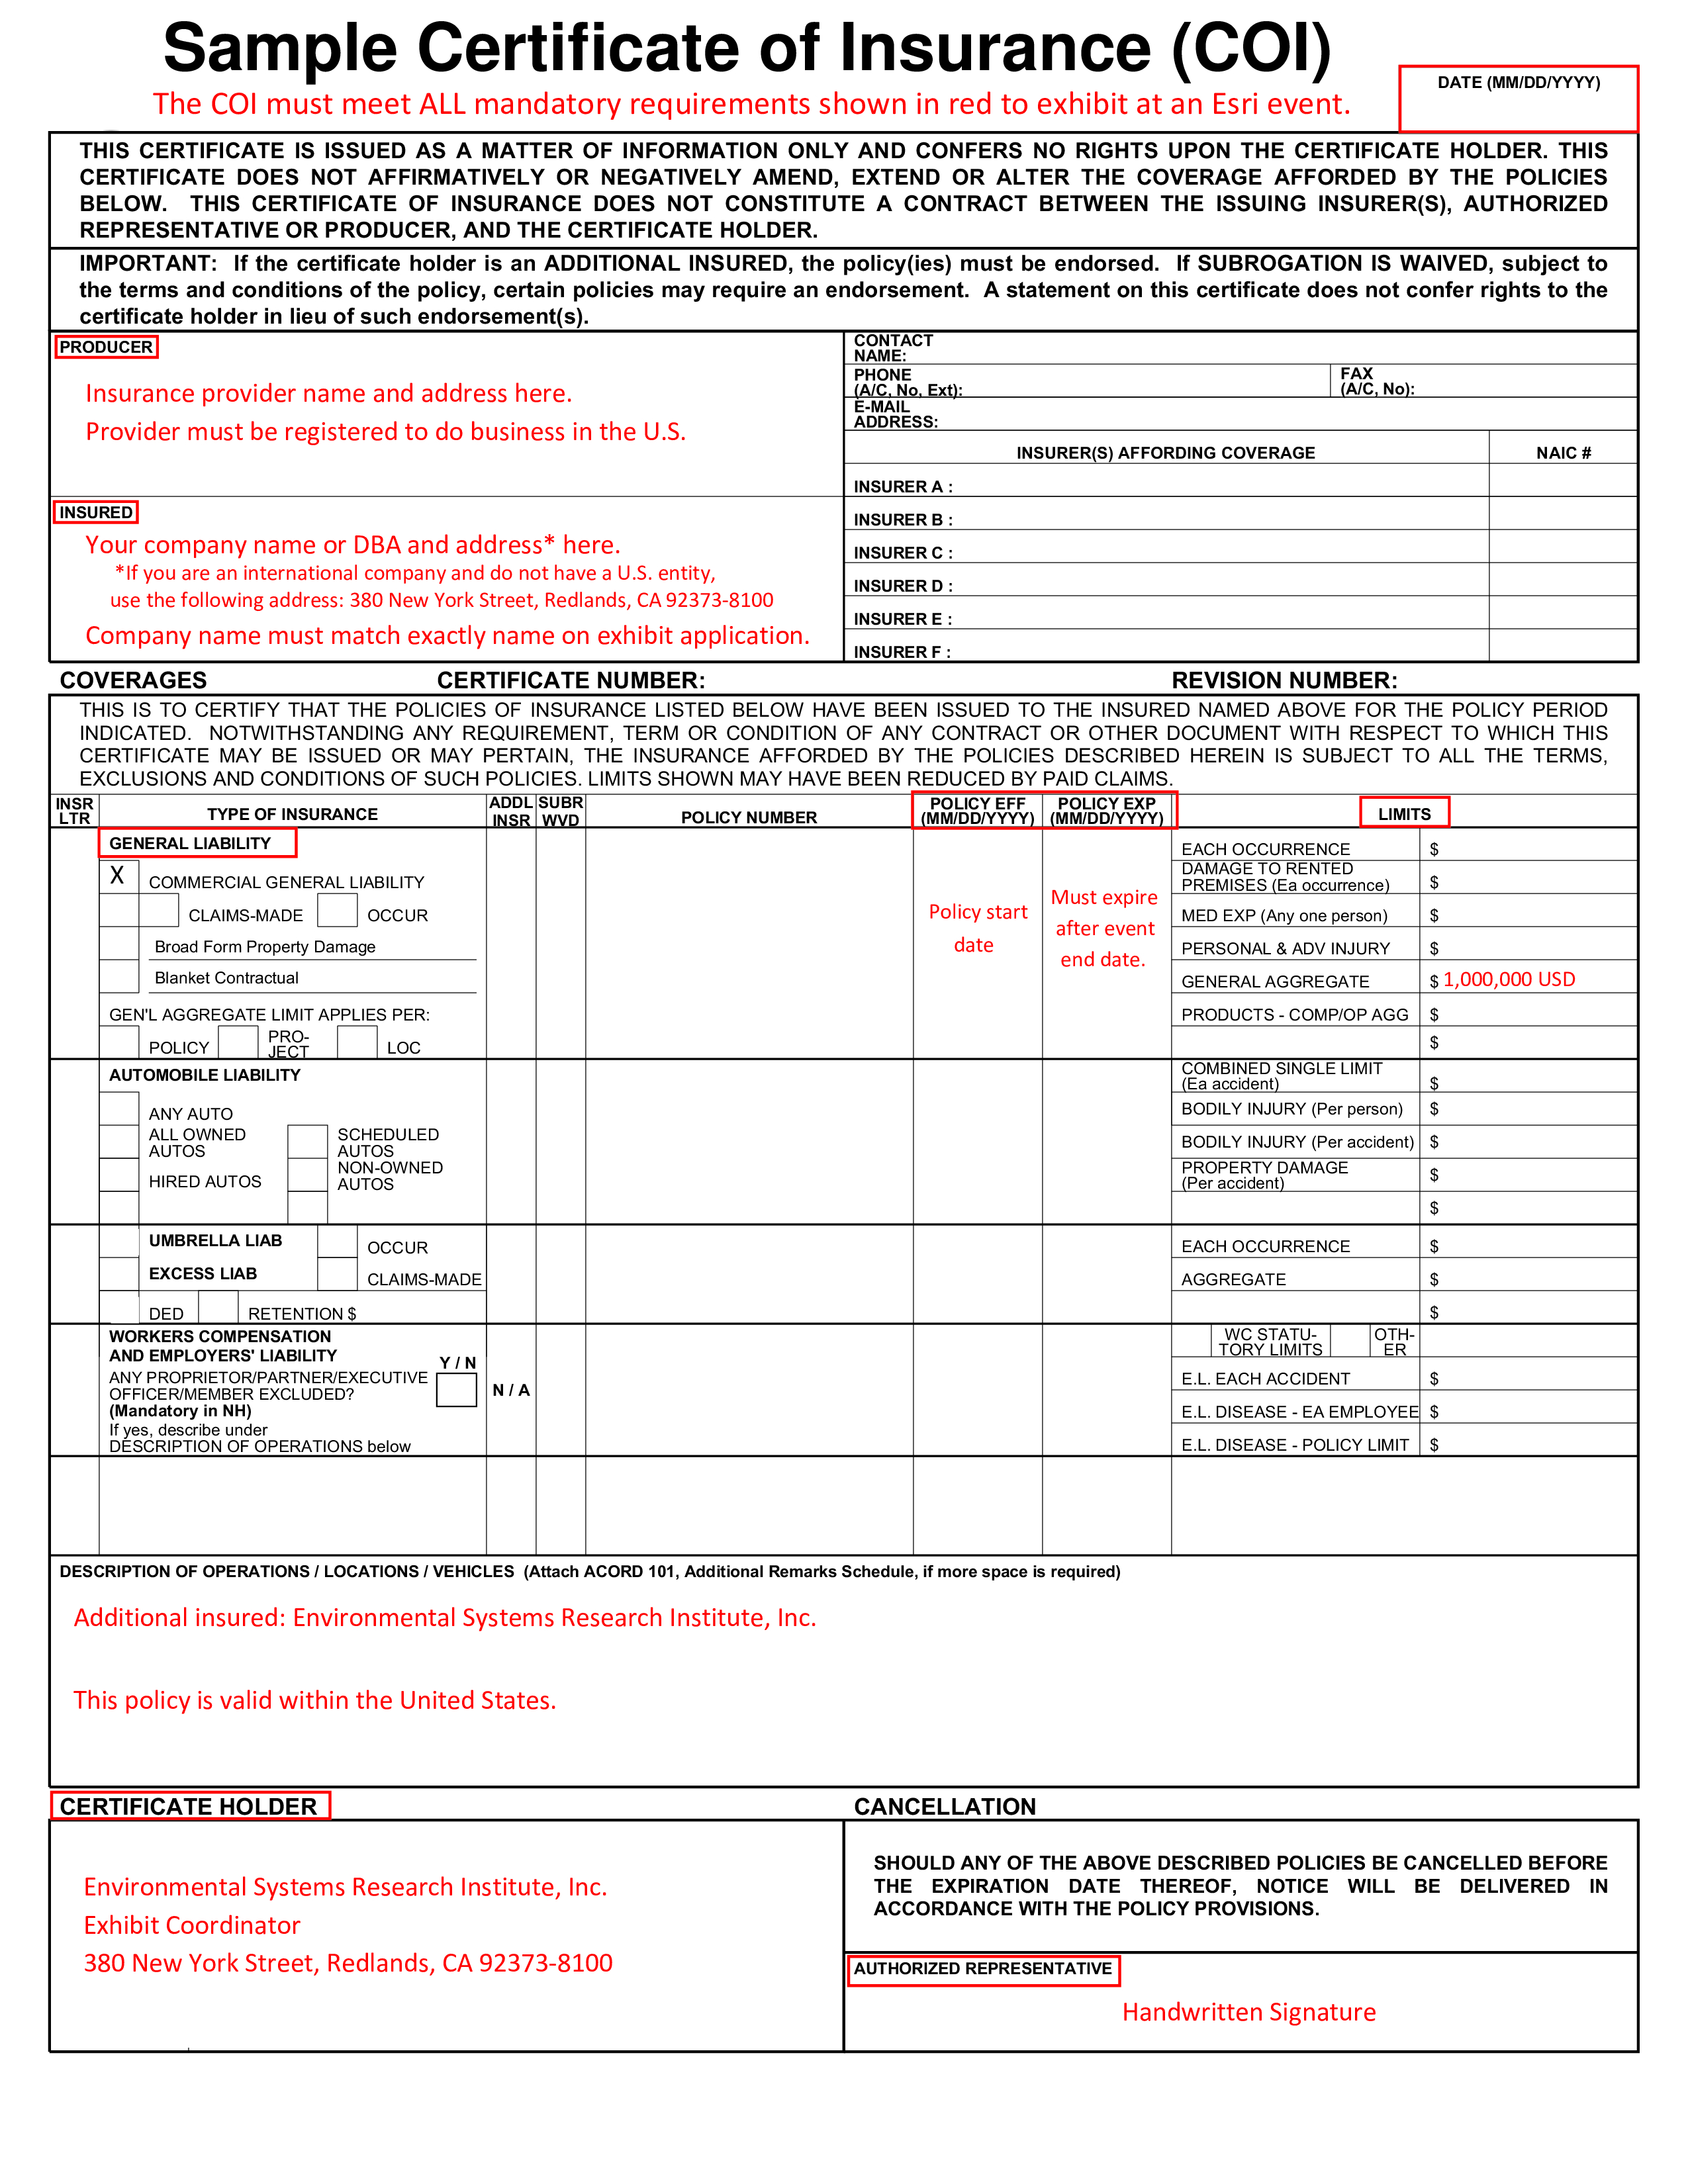 Sample Certificate Of Insurance (Coi) – Sample Certificate In Certificate Of Insurance Template